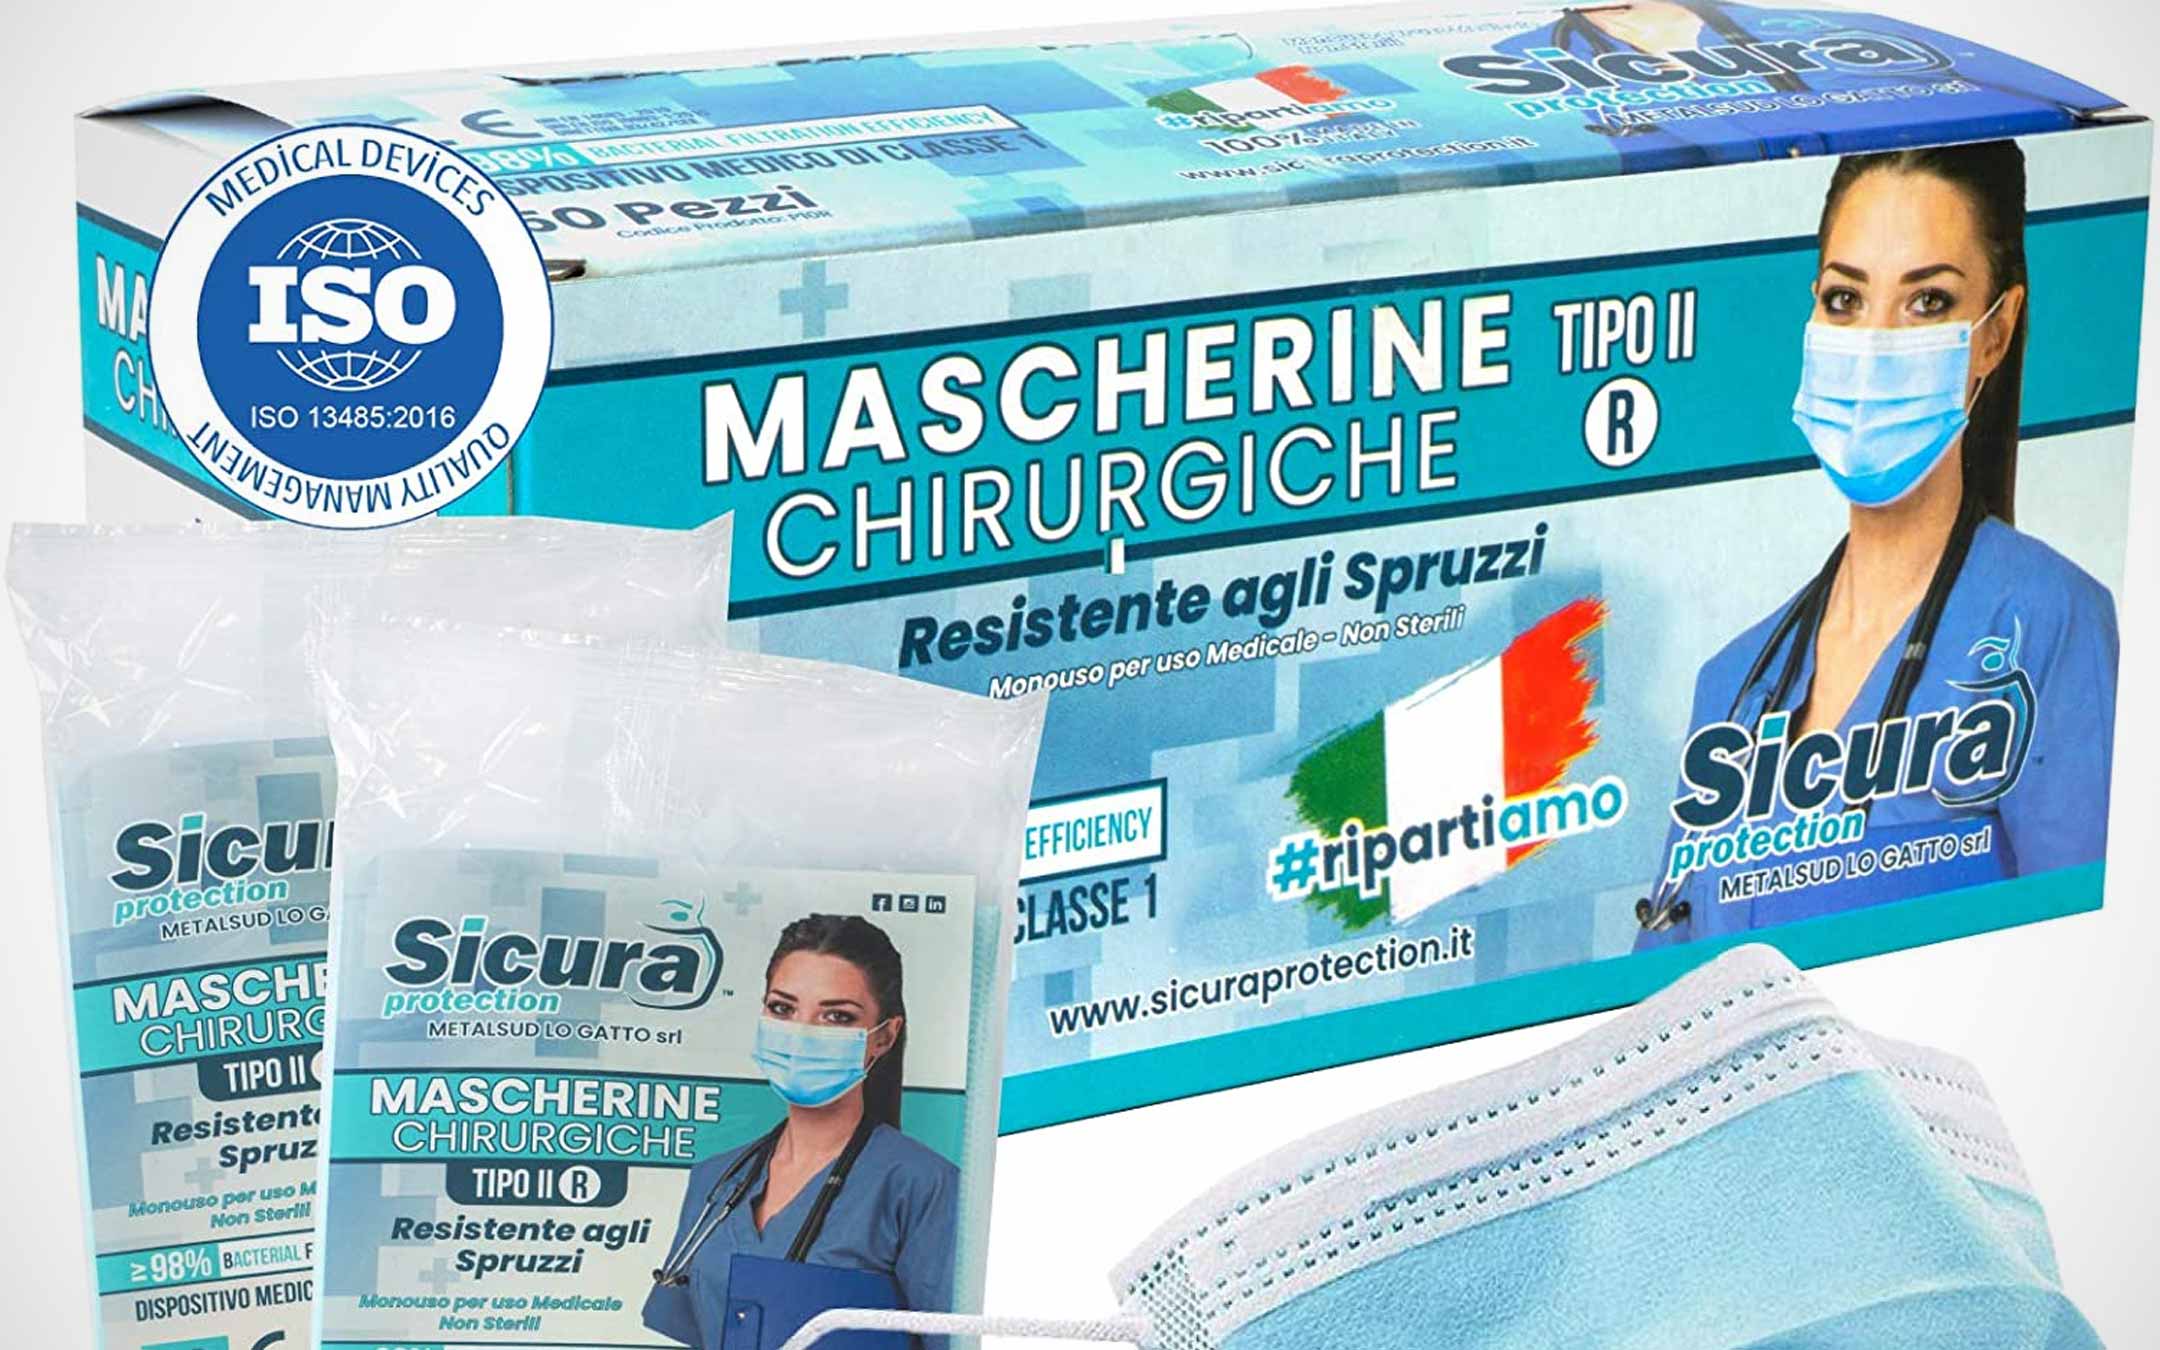 50 mascherine chirurgiche Made in Italy in offerta su Amazon